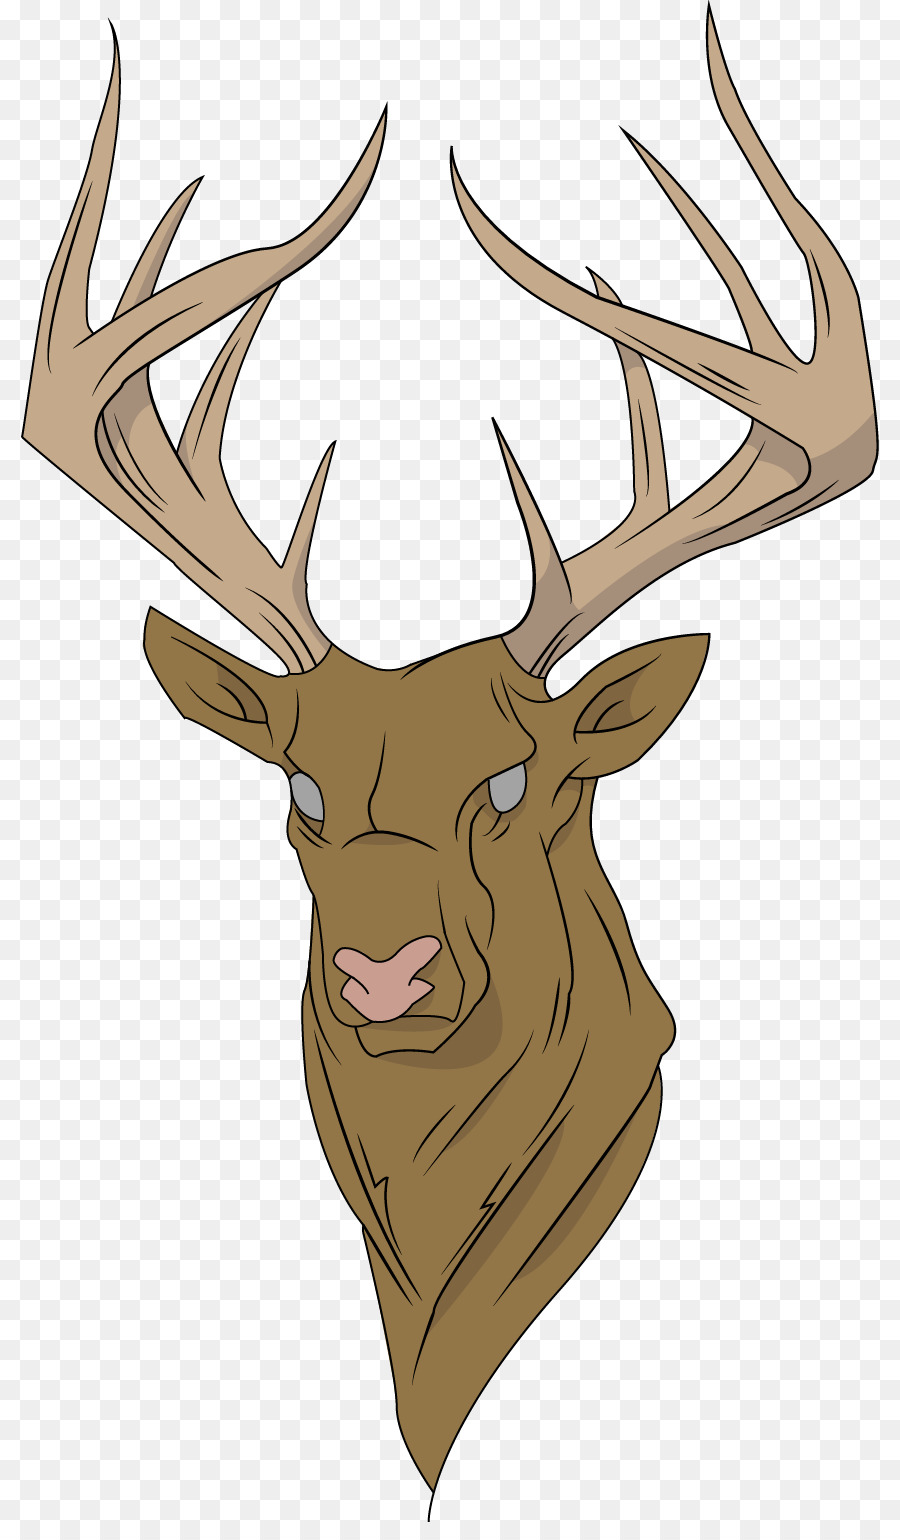 Chihuahua Reindeer Elk Antler - deer head png download - 858*1522 - Free Transparent Chihuahua png Download.